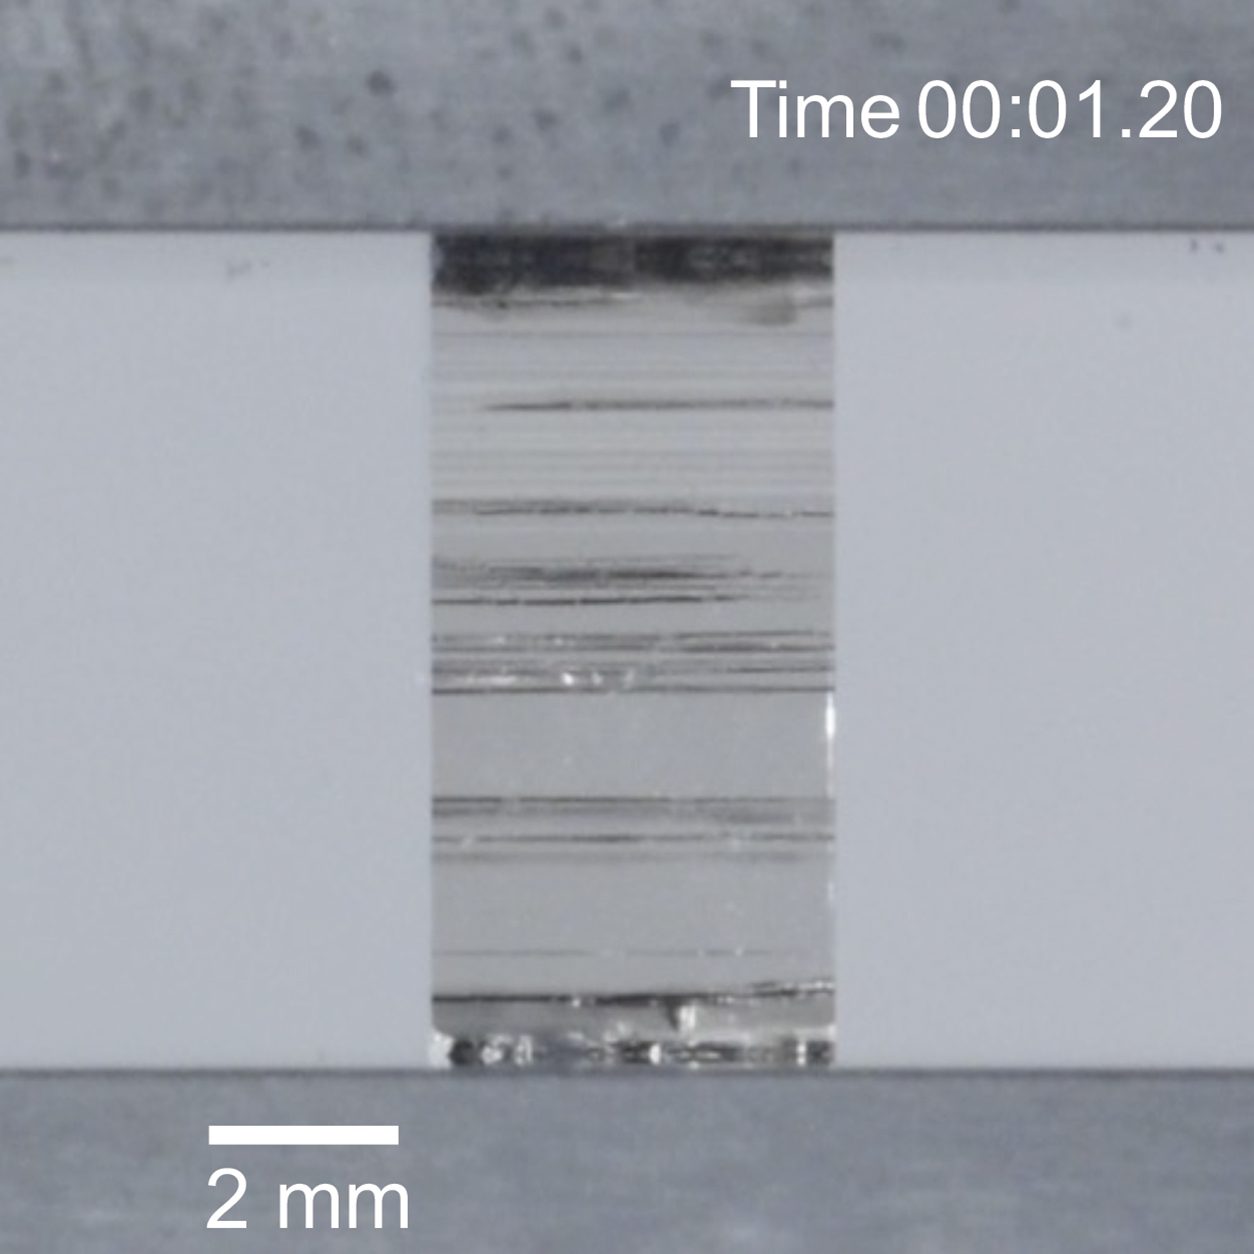 Single-crystal strontium titanate deformed at room temperature during bulk compression